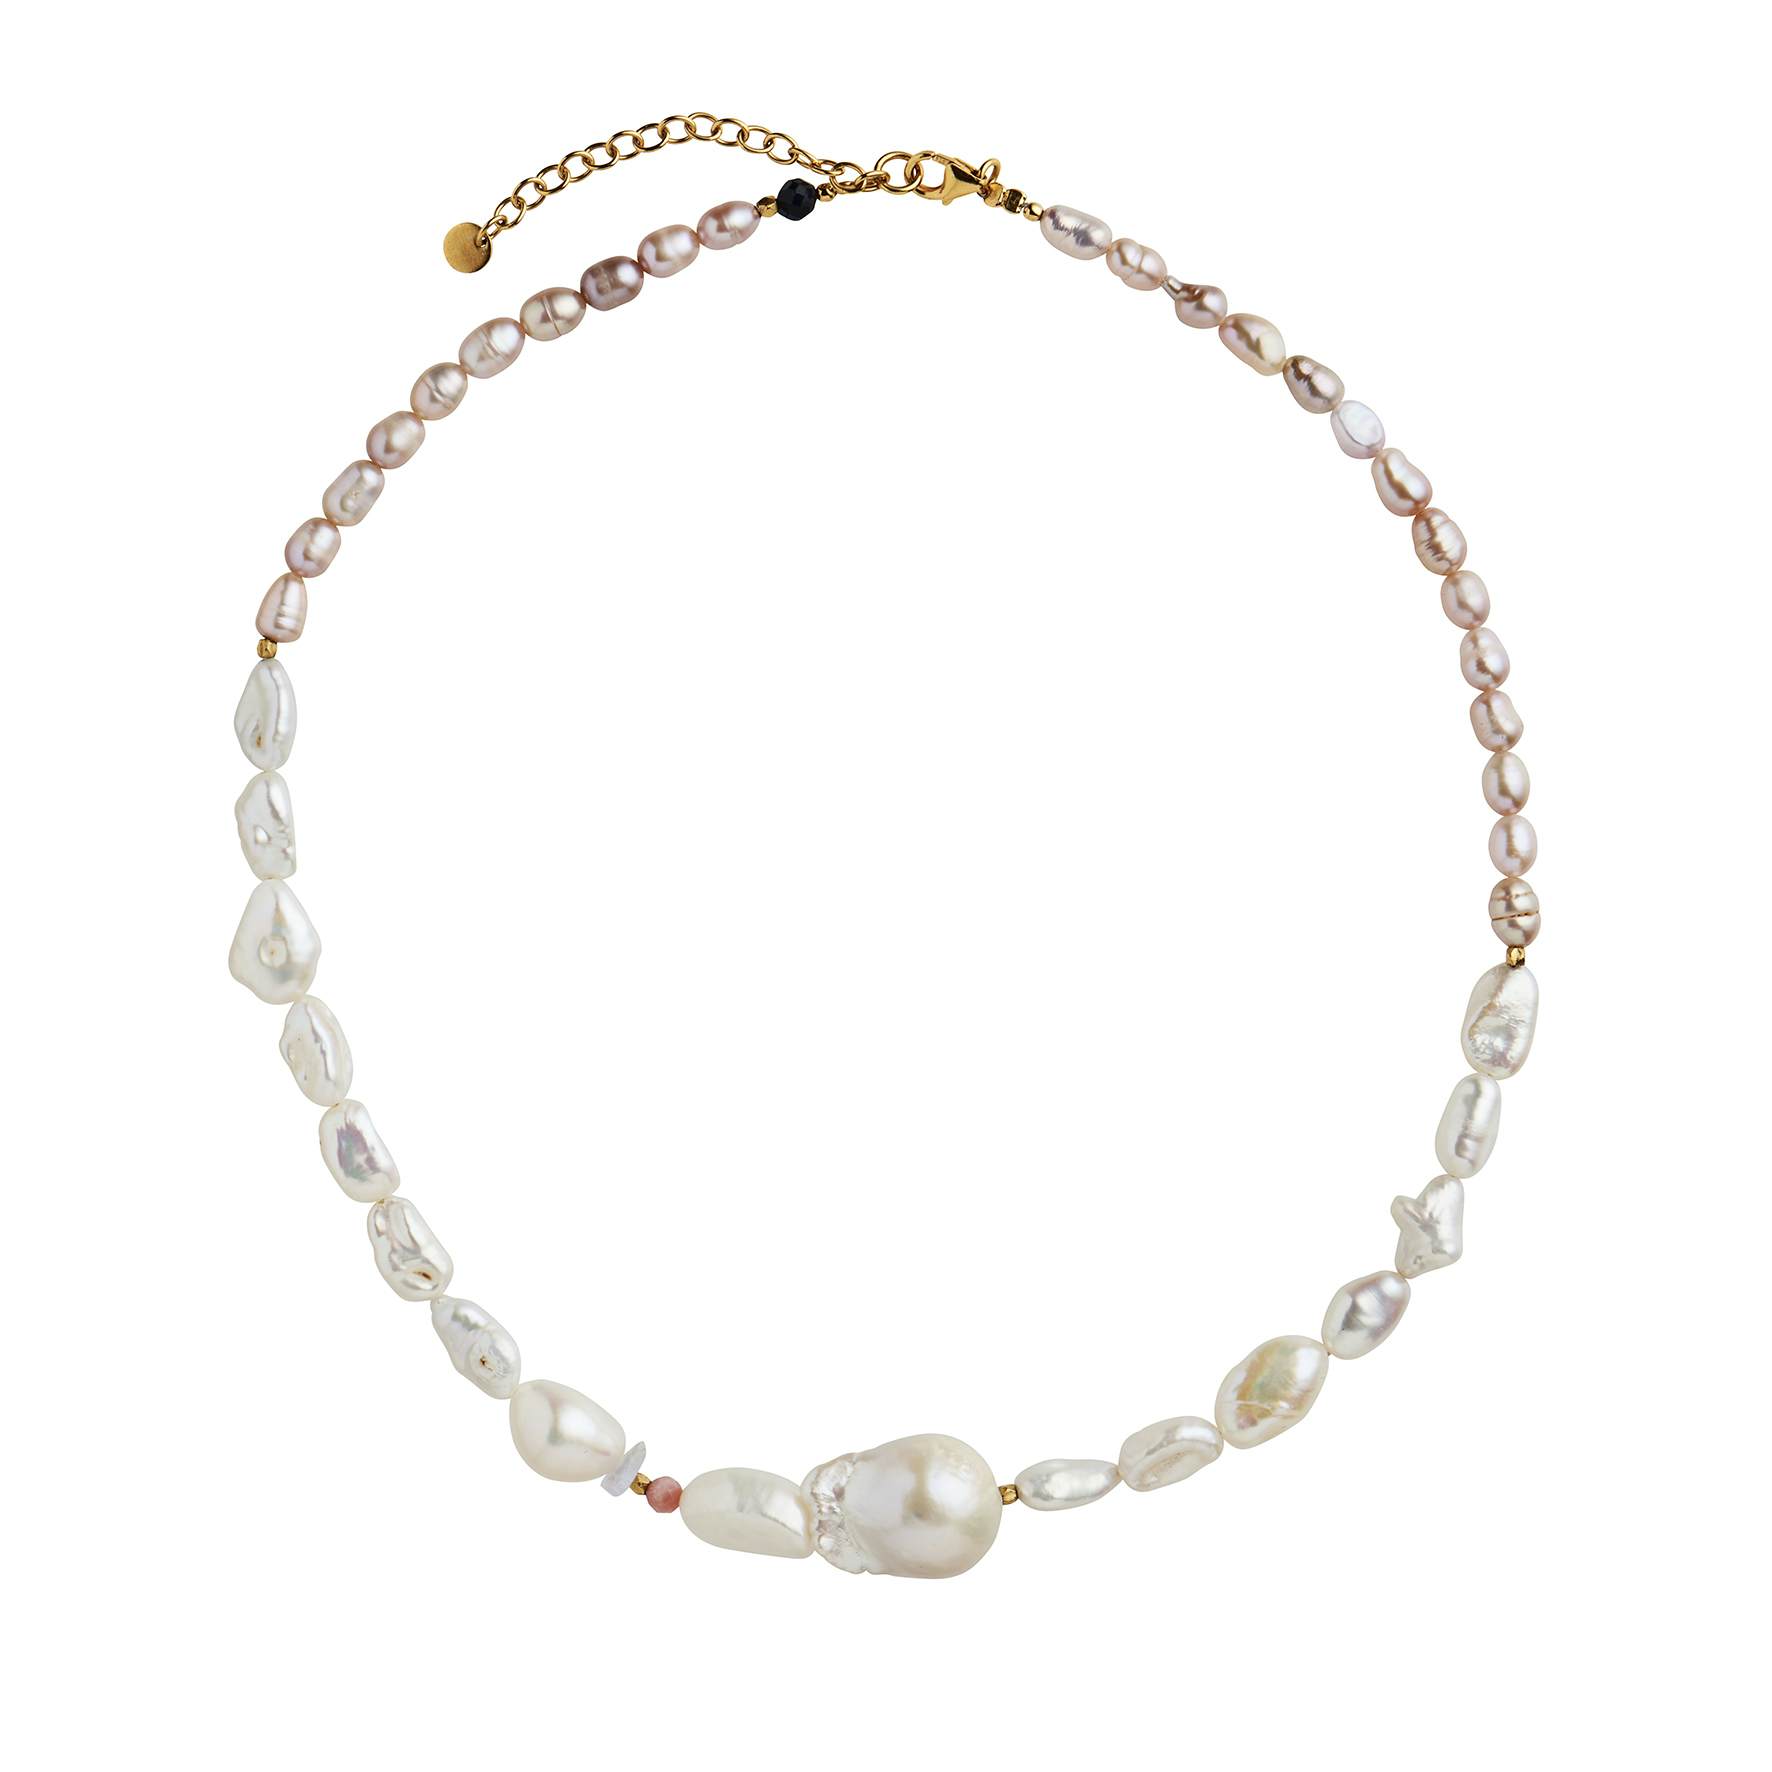 Chunky Glamour Pearl Necklace - White & Rose fra STINE A Jewelry i Forgyldt-Sølv Sterling 925